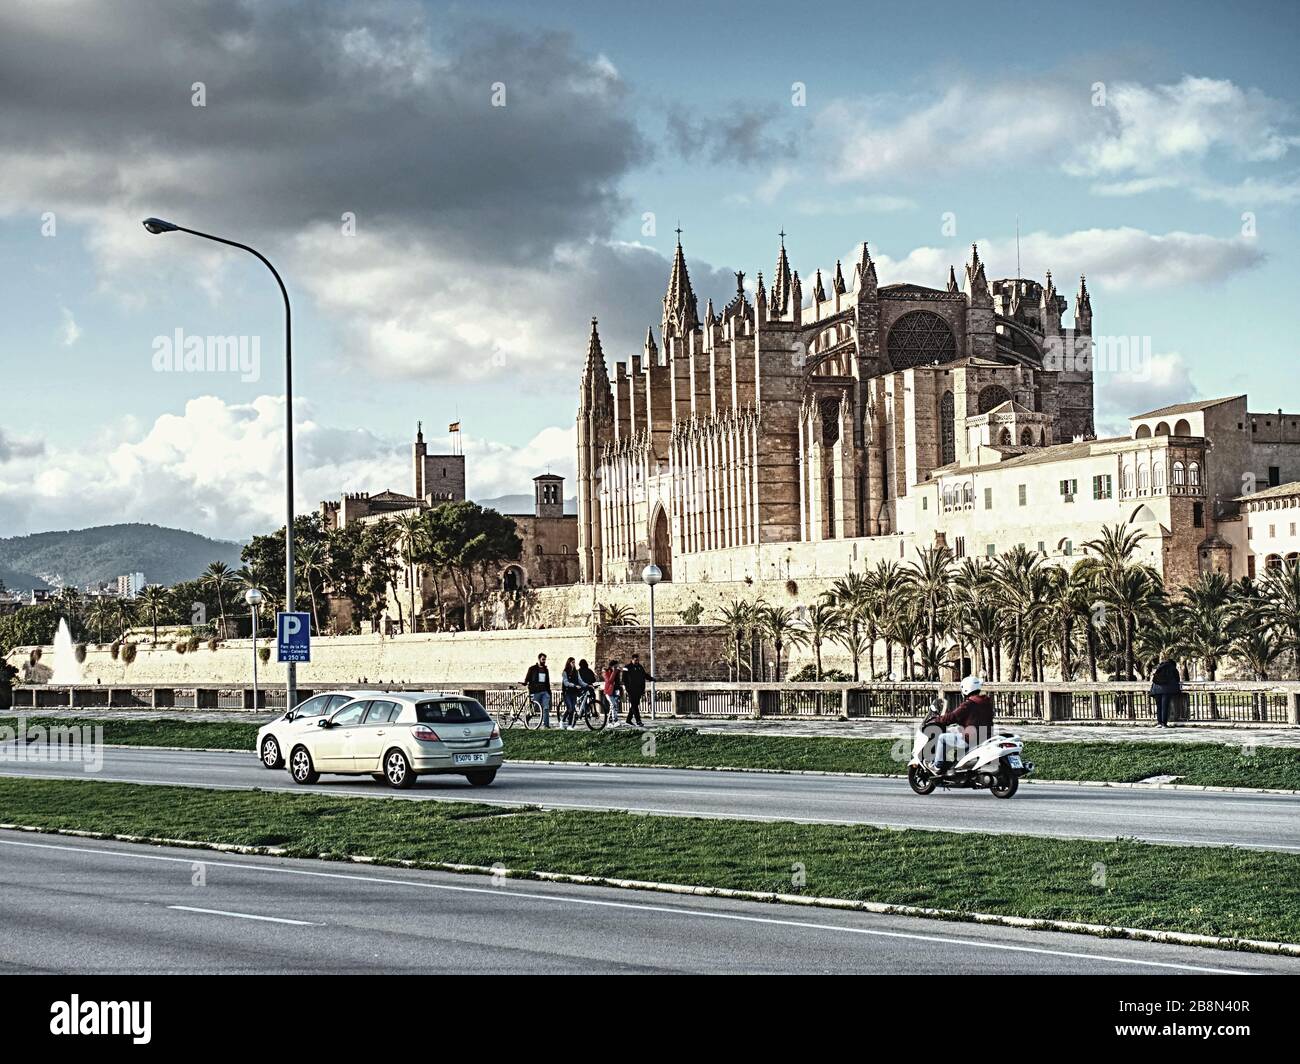 La Seu, the gothic medieval cathedral of Palma de Mallorca, Spain. 26th of January 2020 Stock Photo